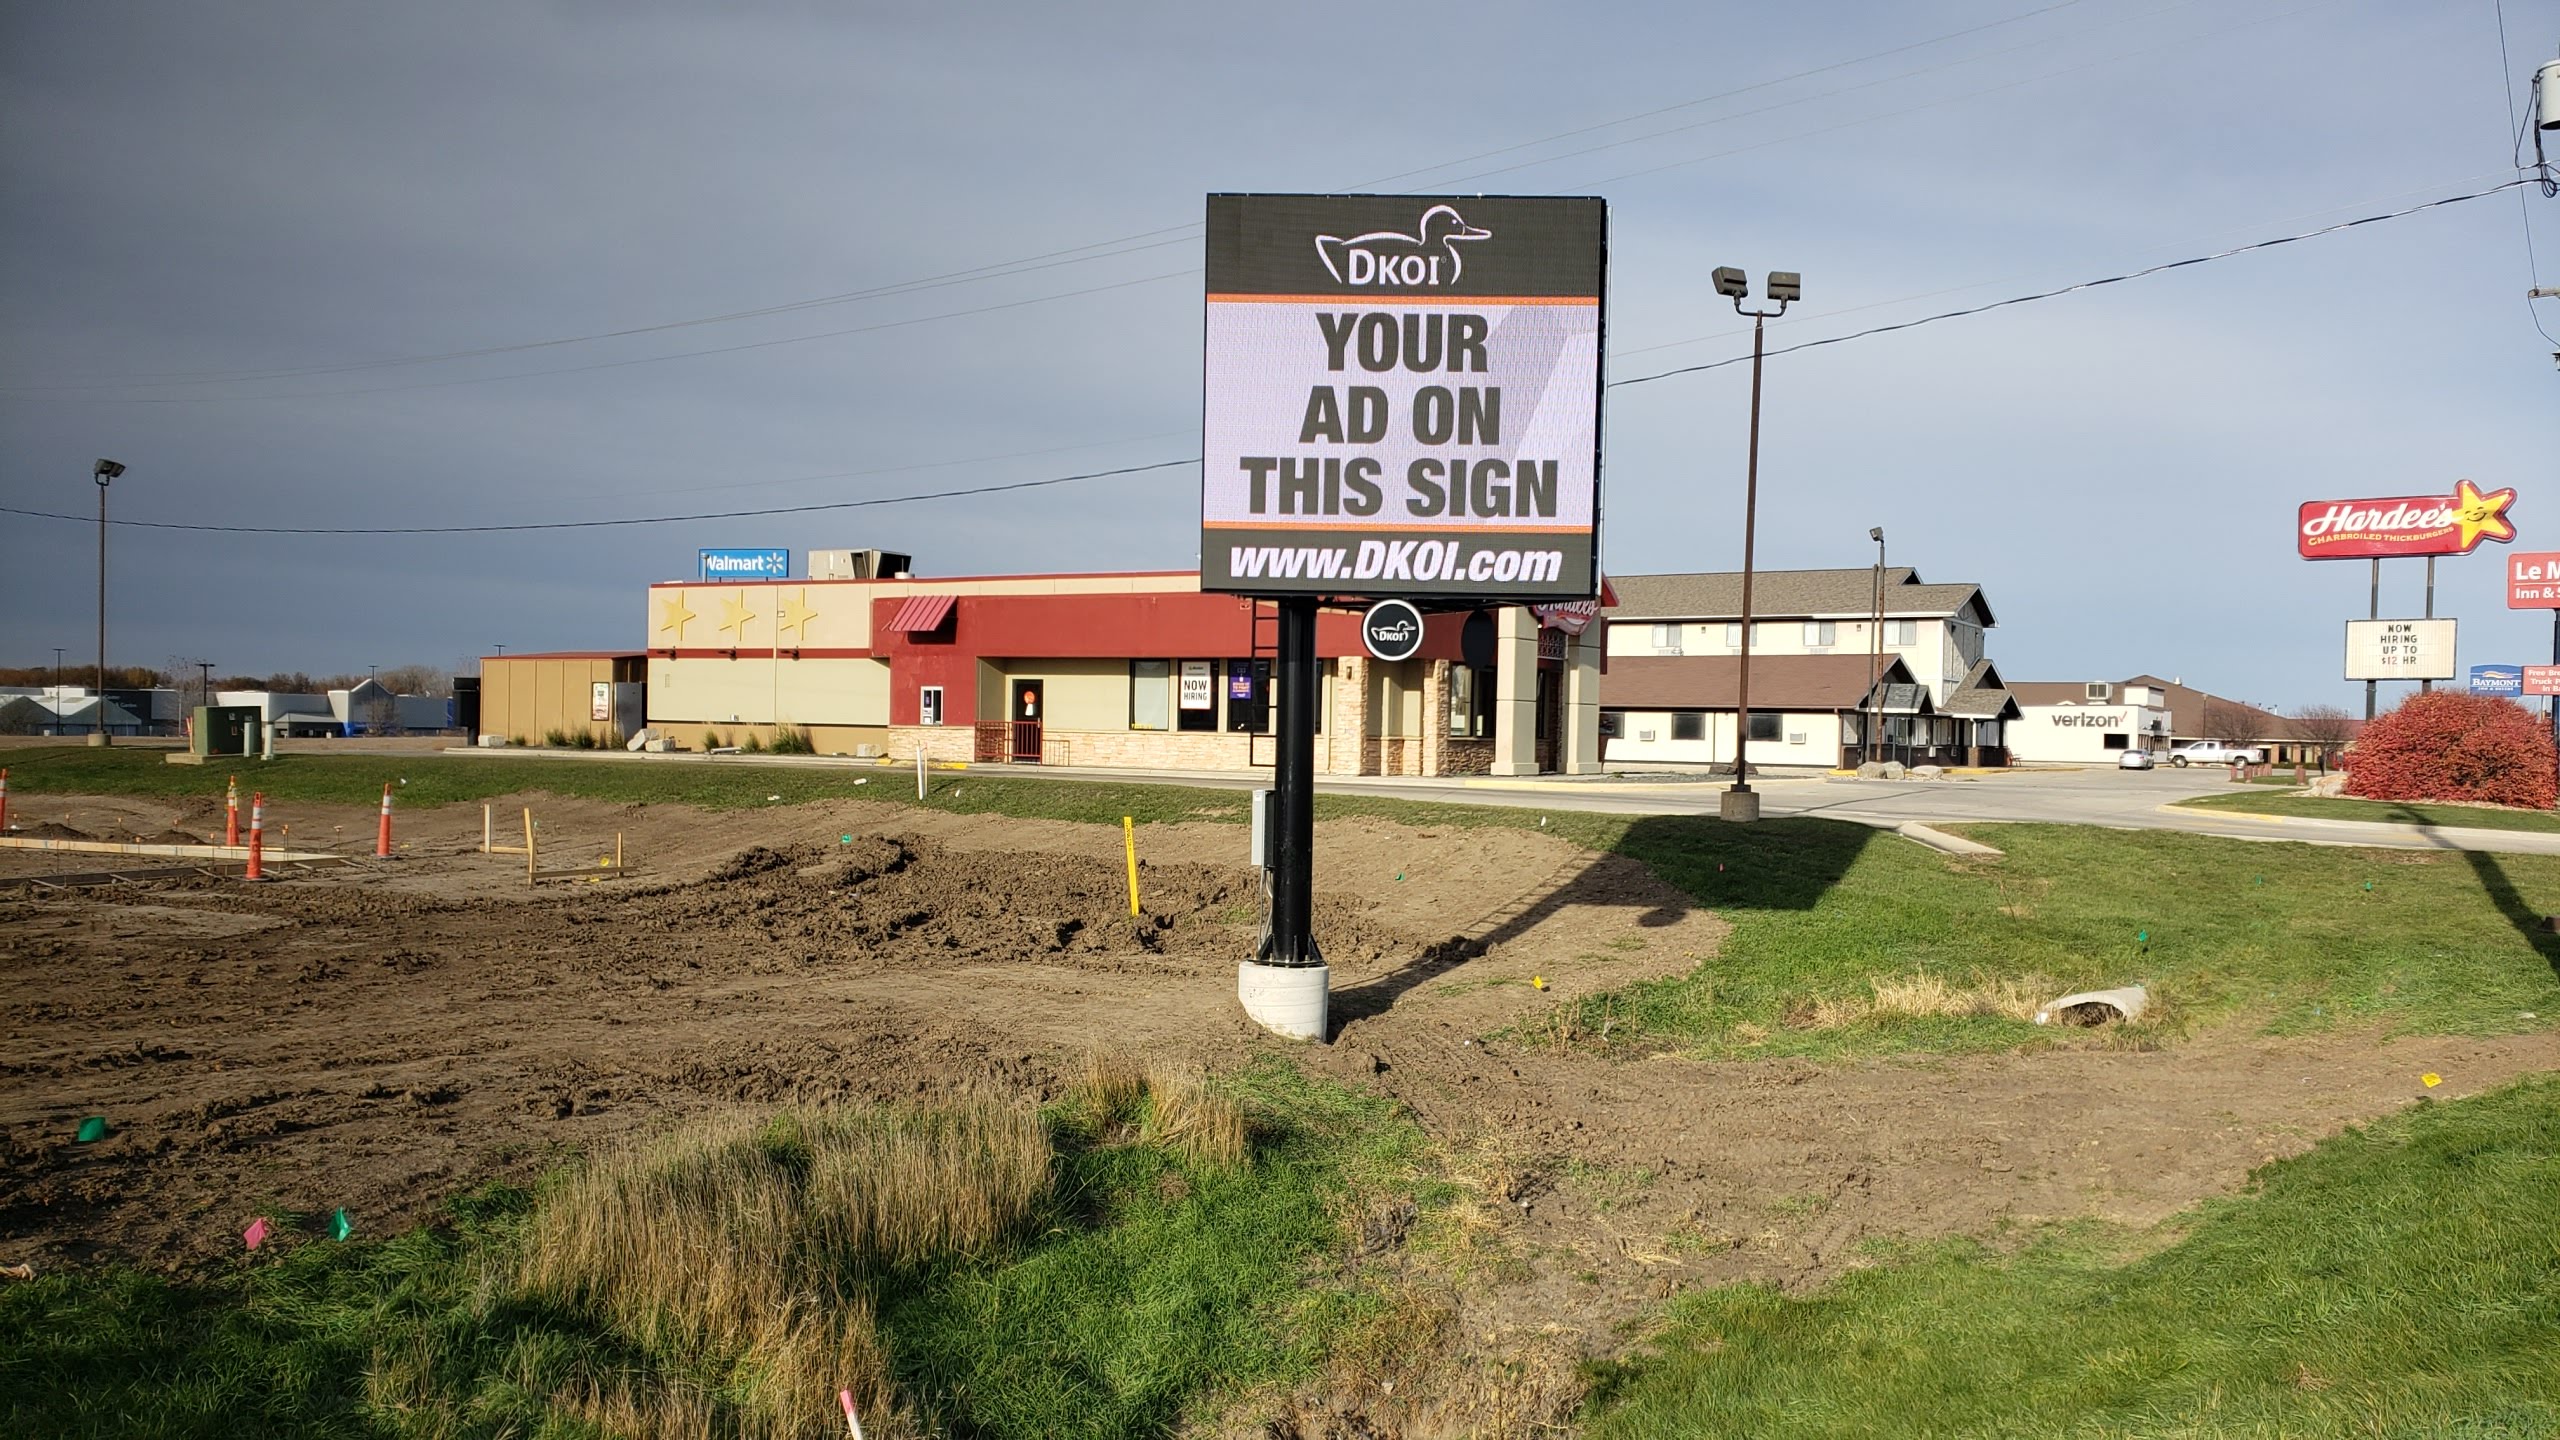 Le Mars, Iowa - 12' x 12' Double Sided Billboard